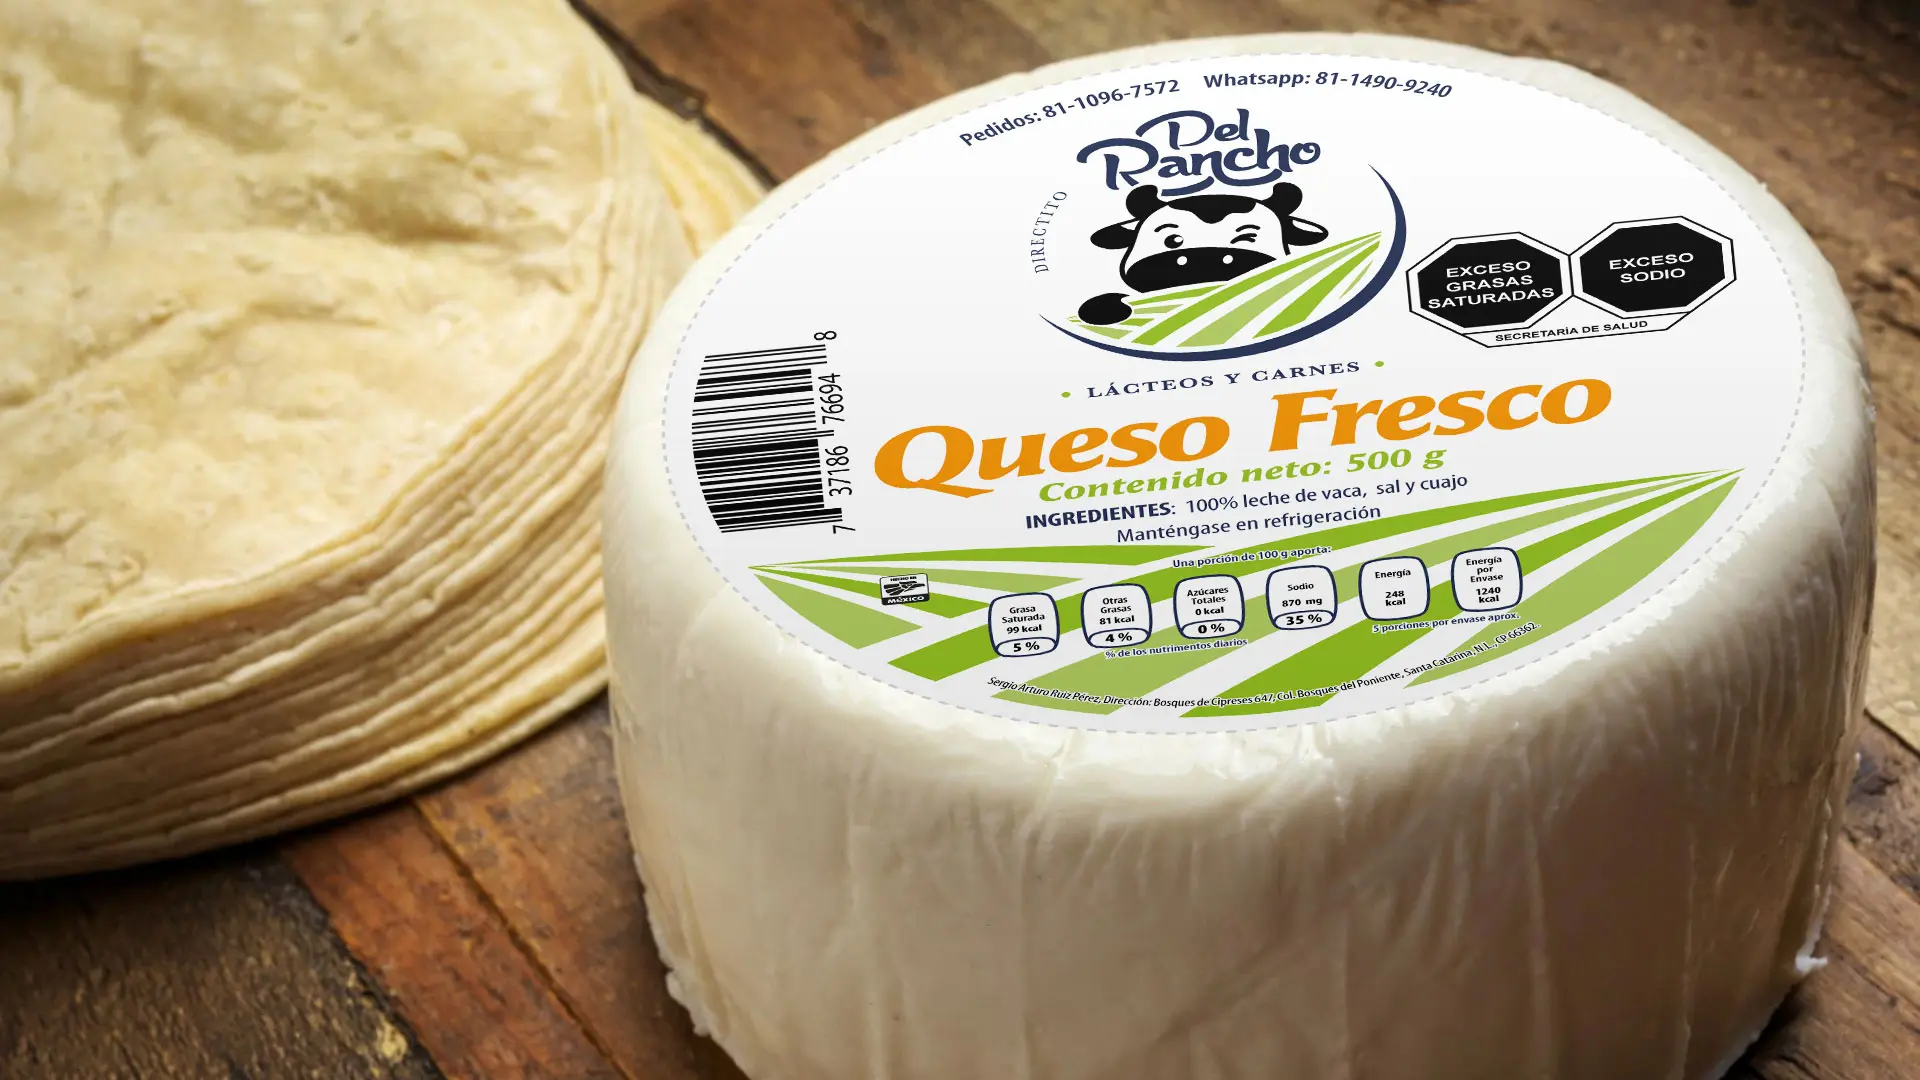 impresion de etiquetas para quesos online - Cómo hacer impresion de etiquetas